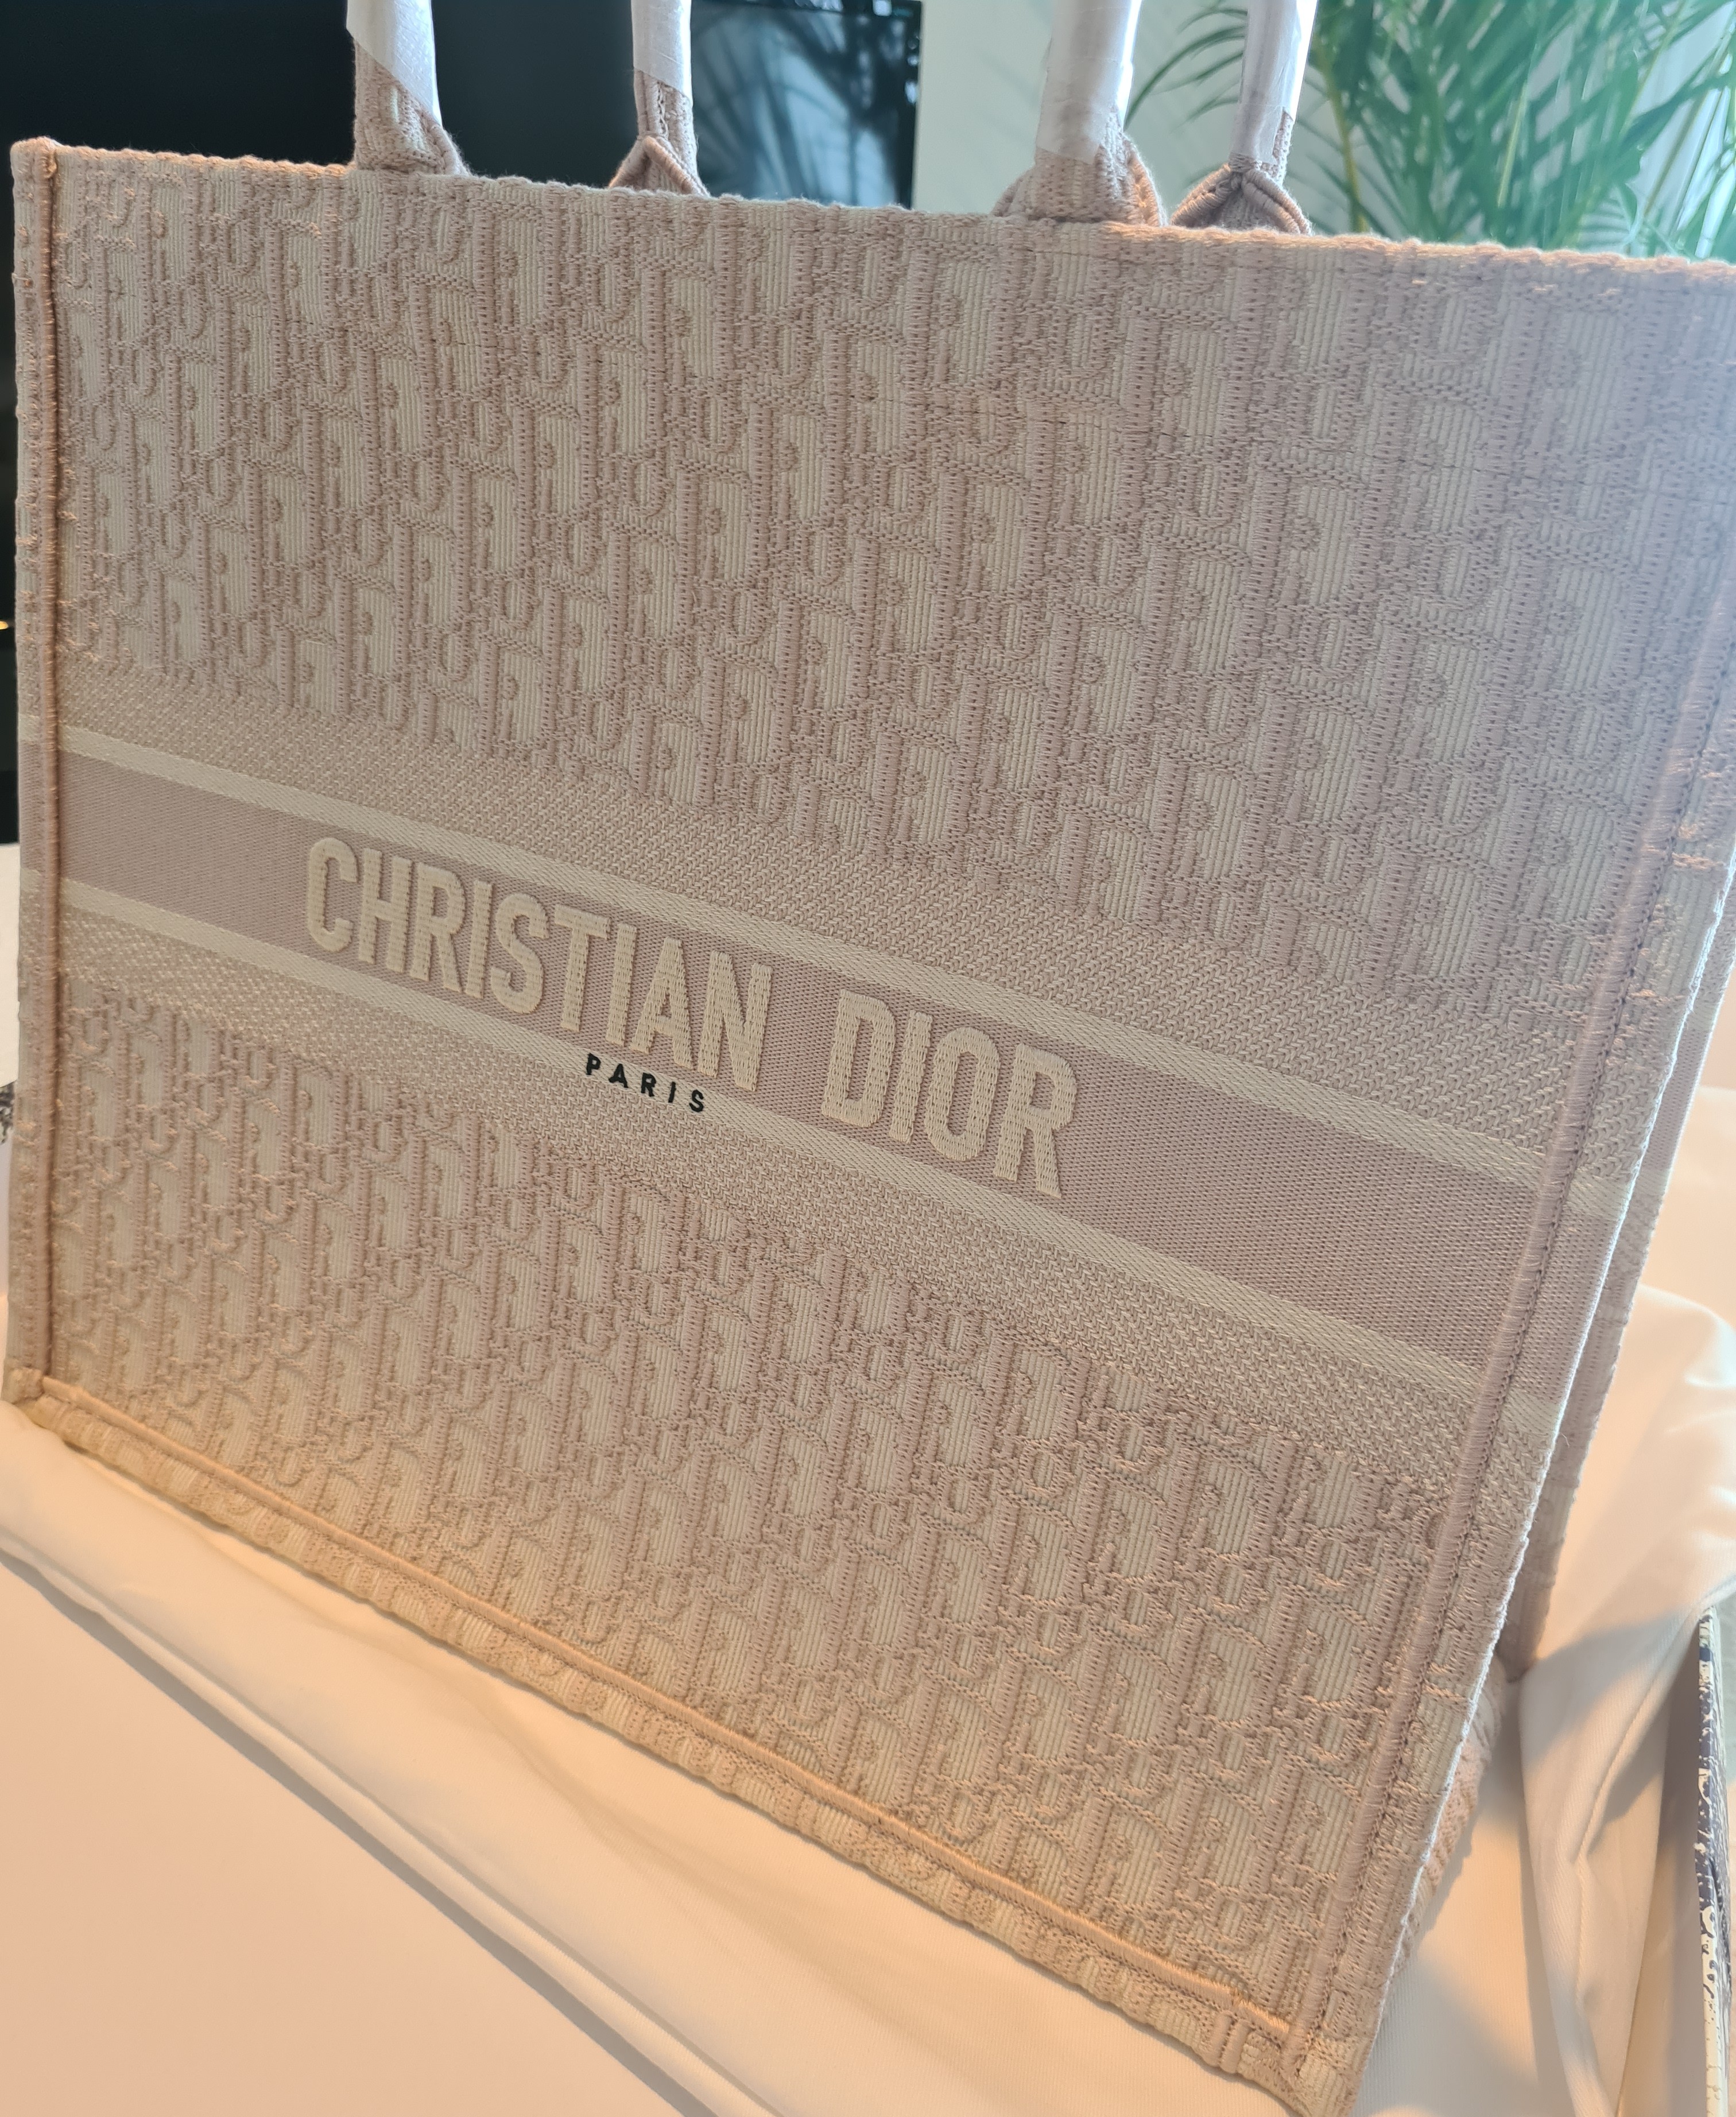 New Designer Handbag Unboxing - Saint Laurent Sac De Jour Croc